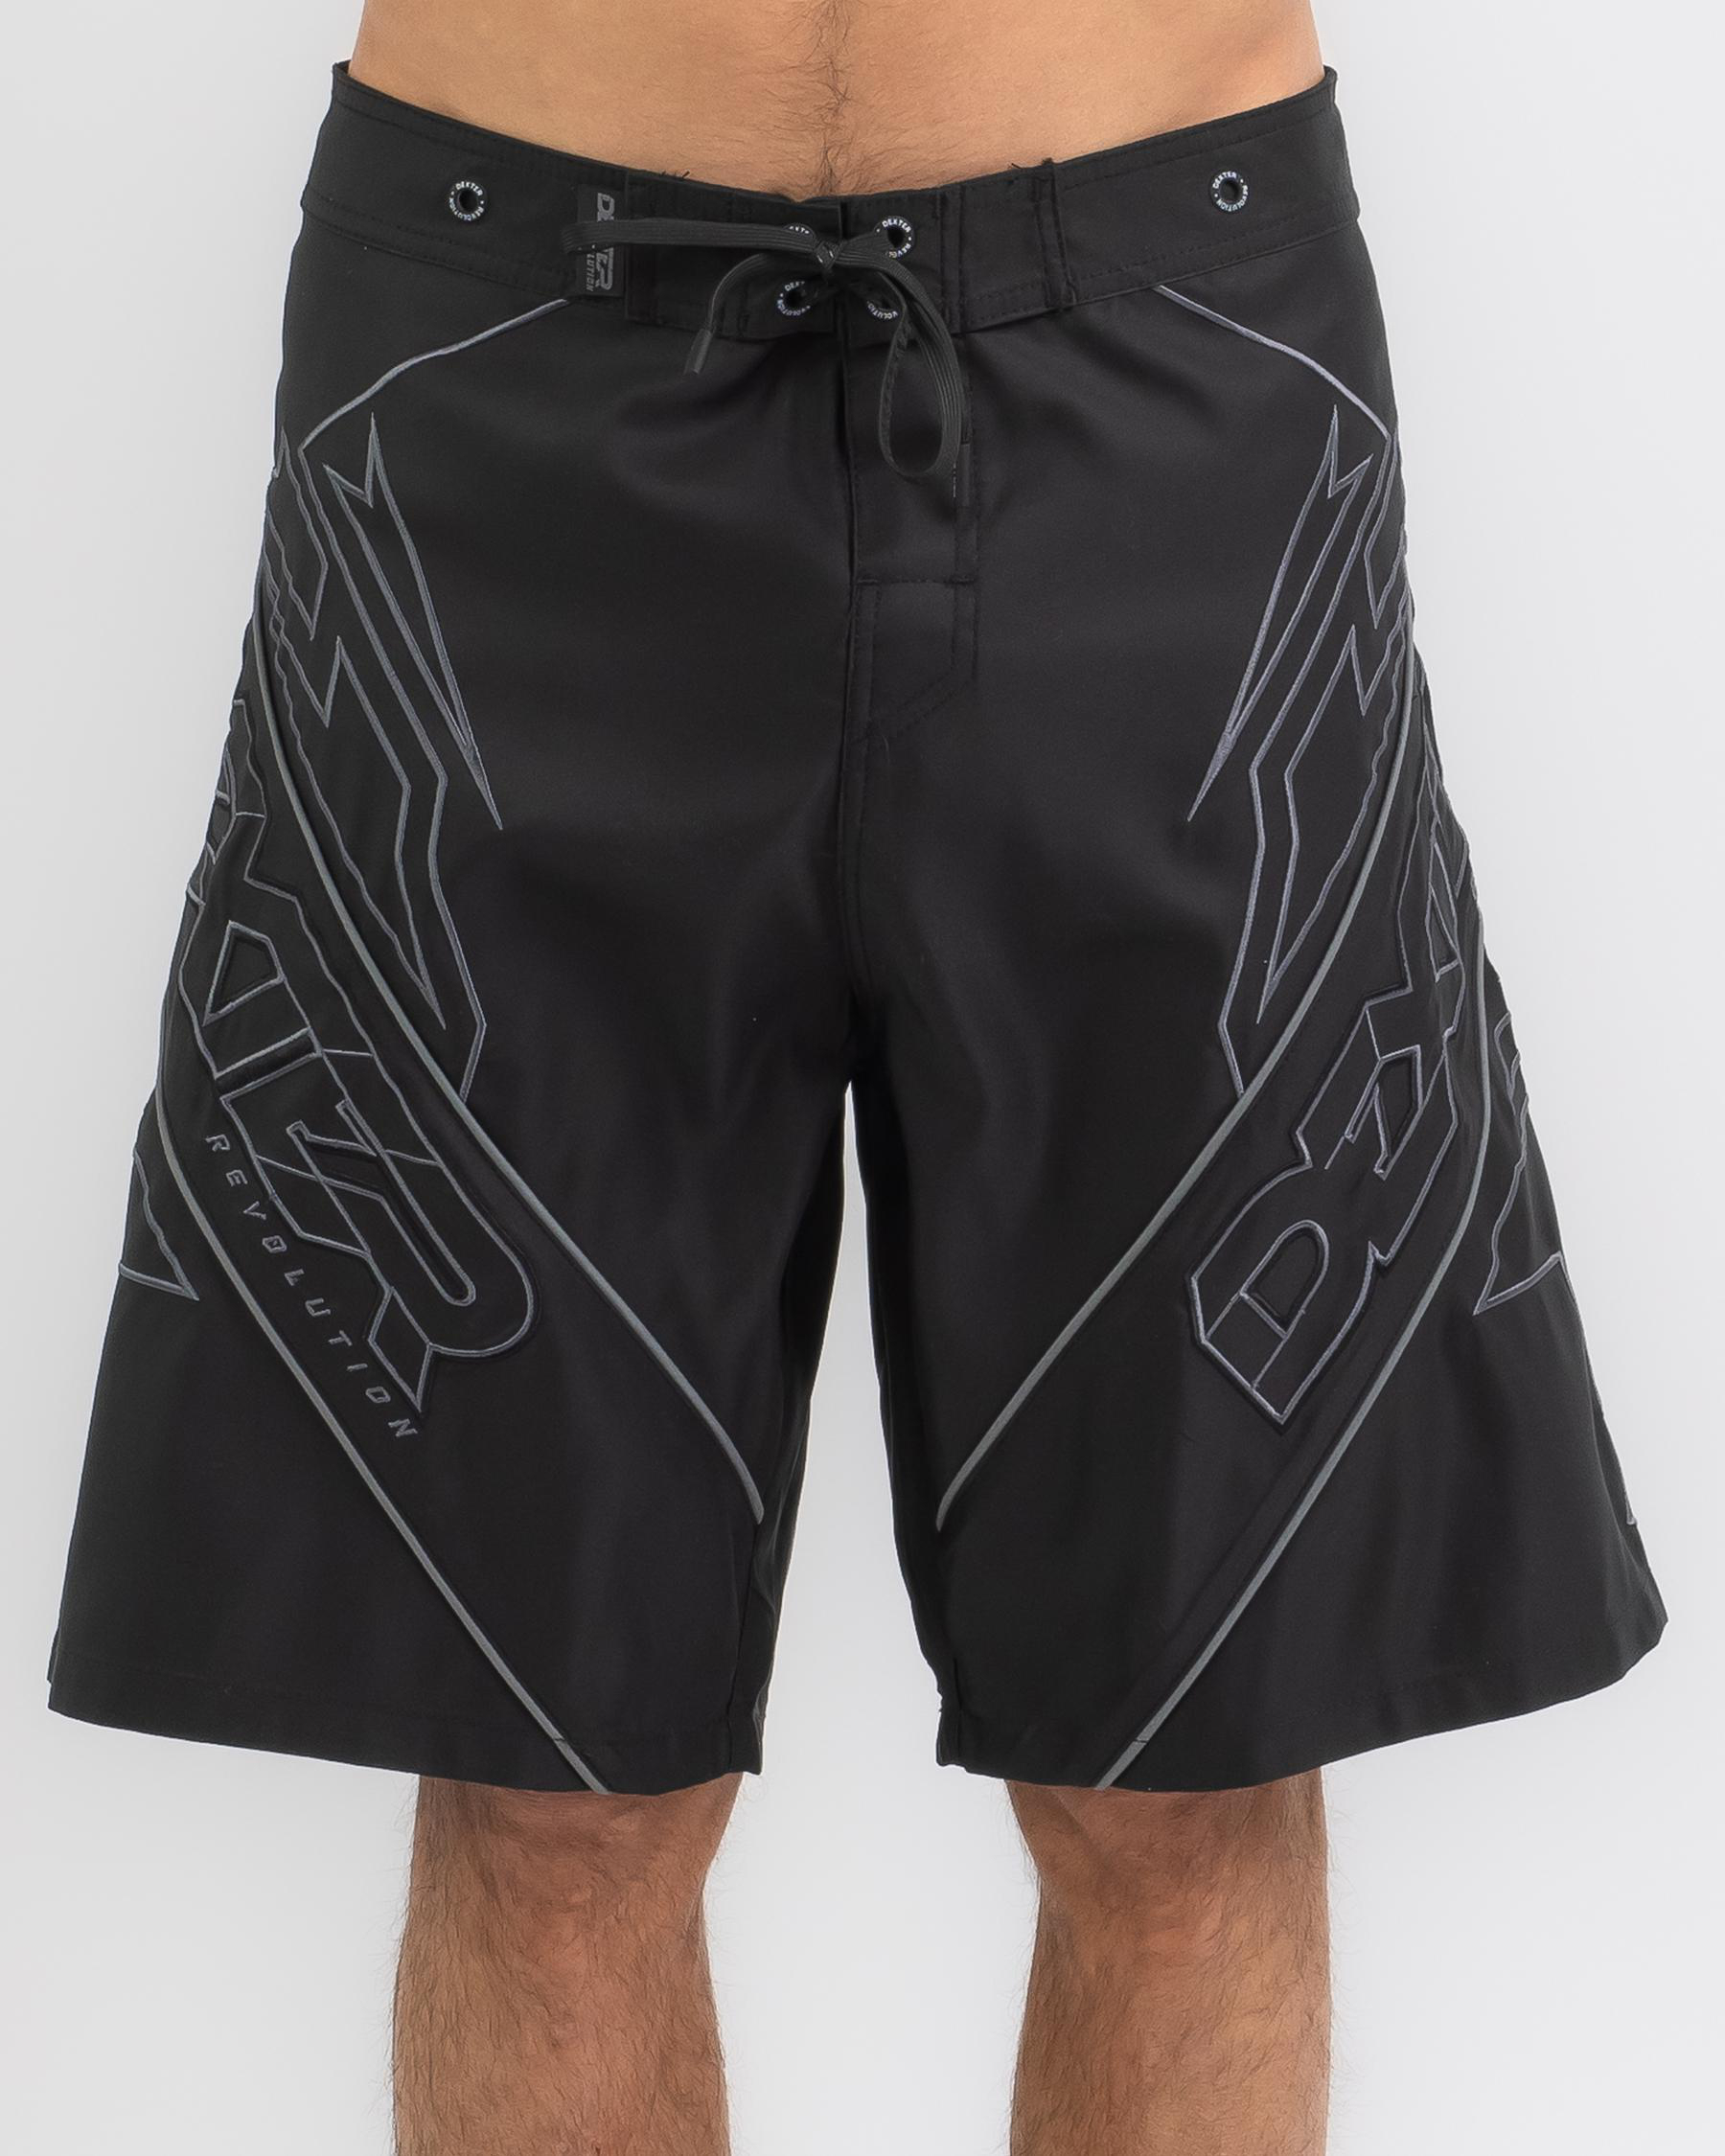 Dexter Mechanical Board Shorts In Black/black - FREE* Shipping & Easy ...